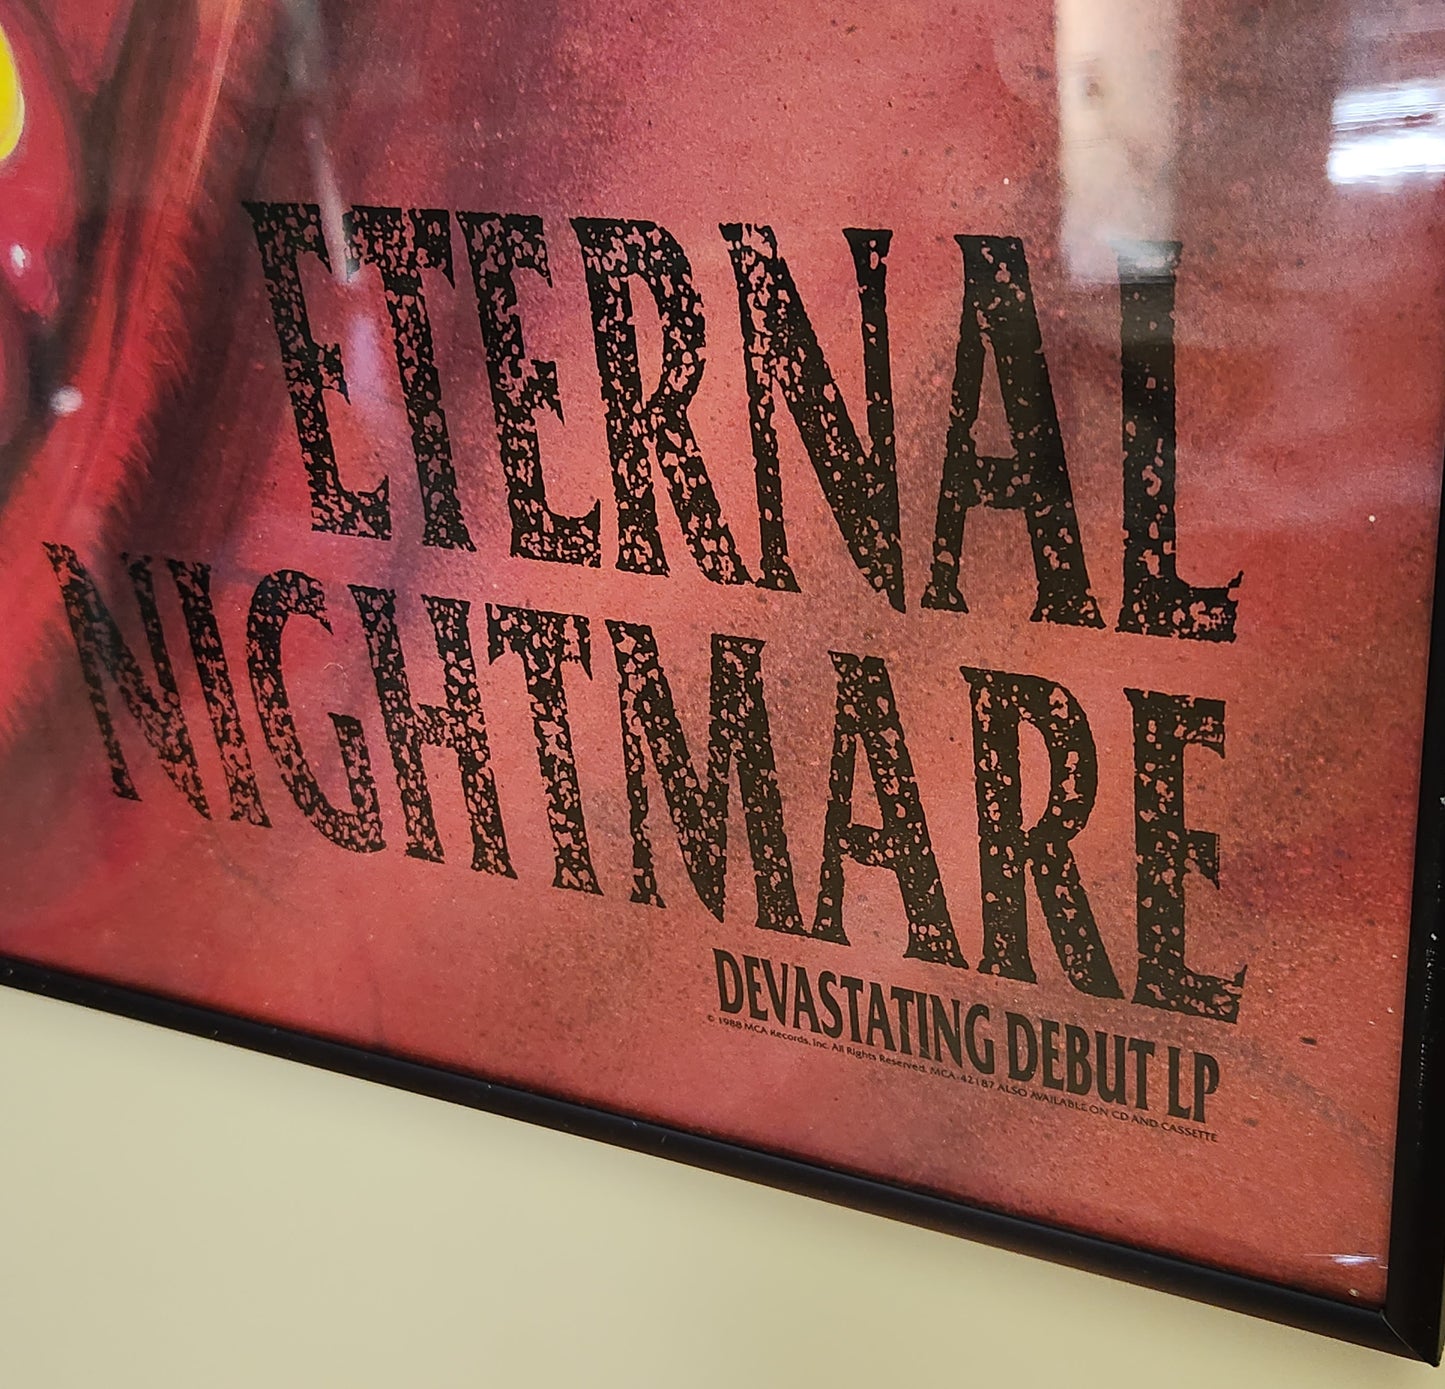 Vio-Lence "Eternal Nightmare" 1988 Record Store Album Promo Poster